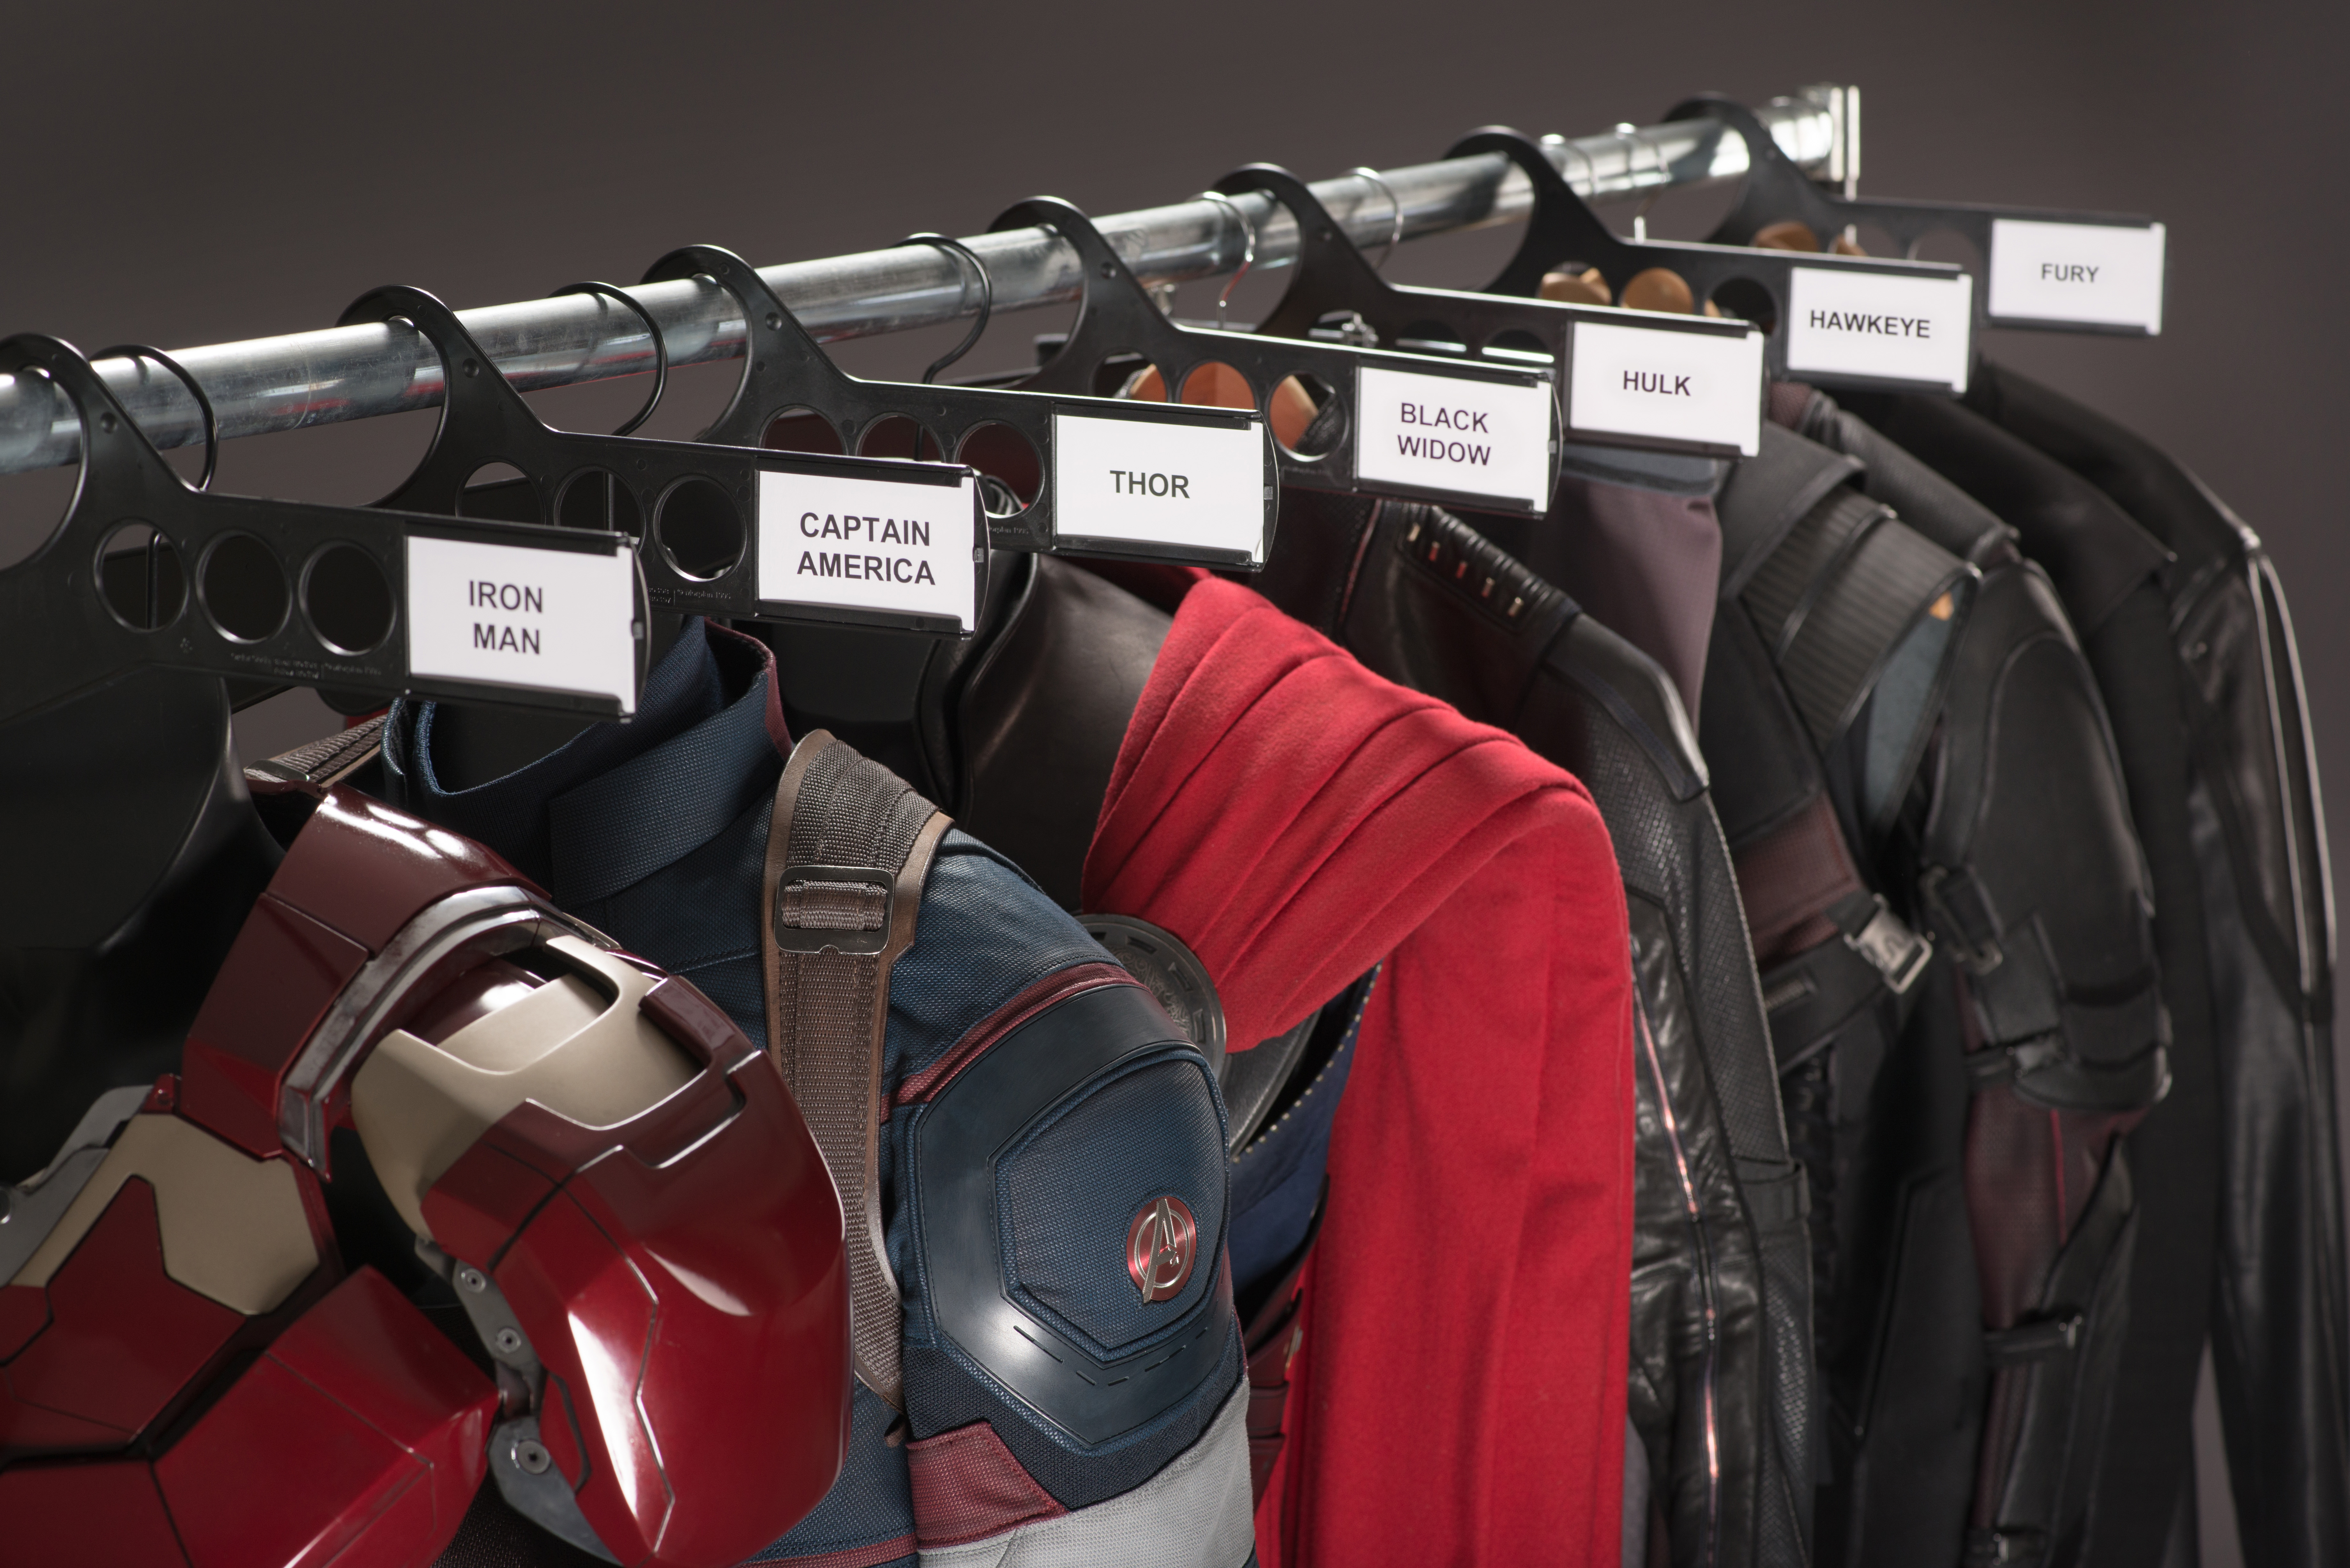 Avengers costumes